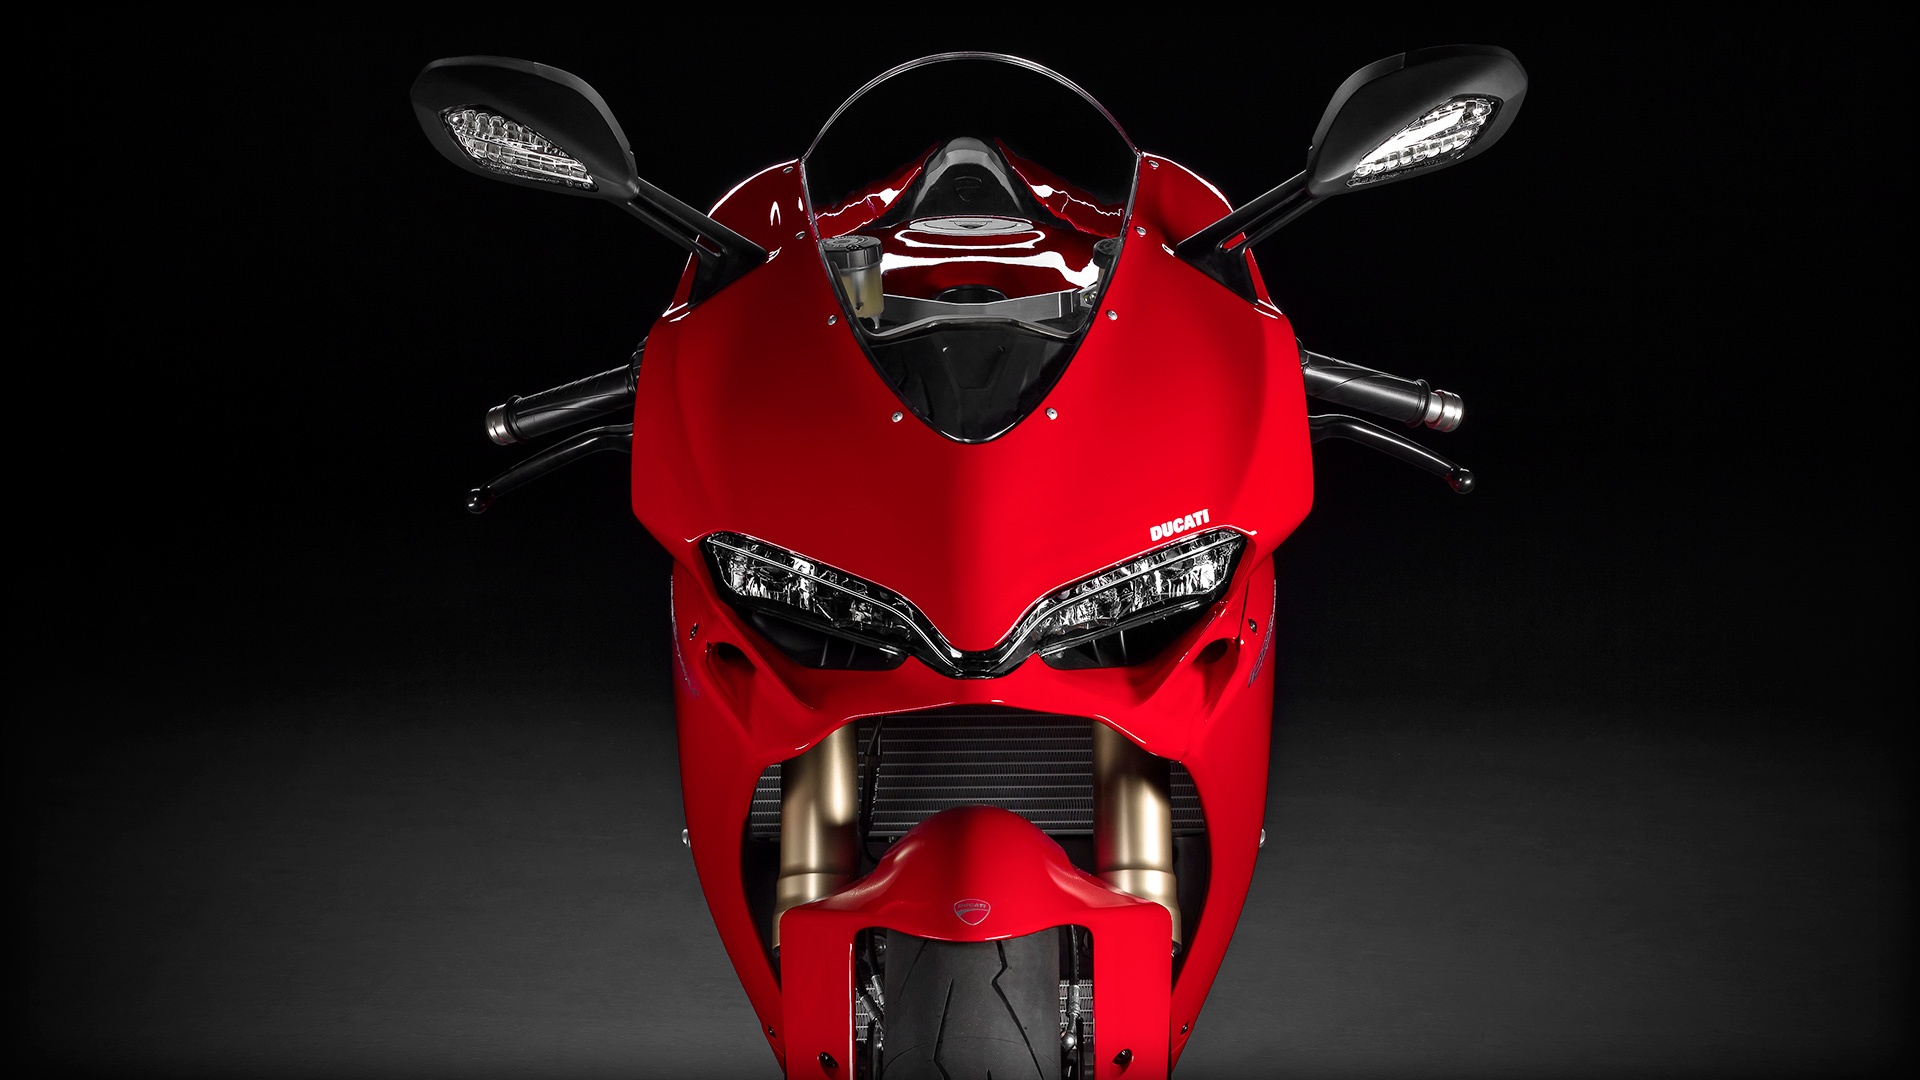 Ducati 959 Panigale revealed